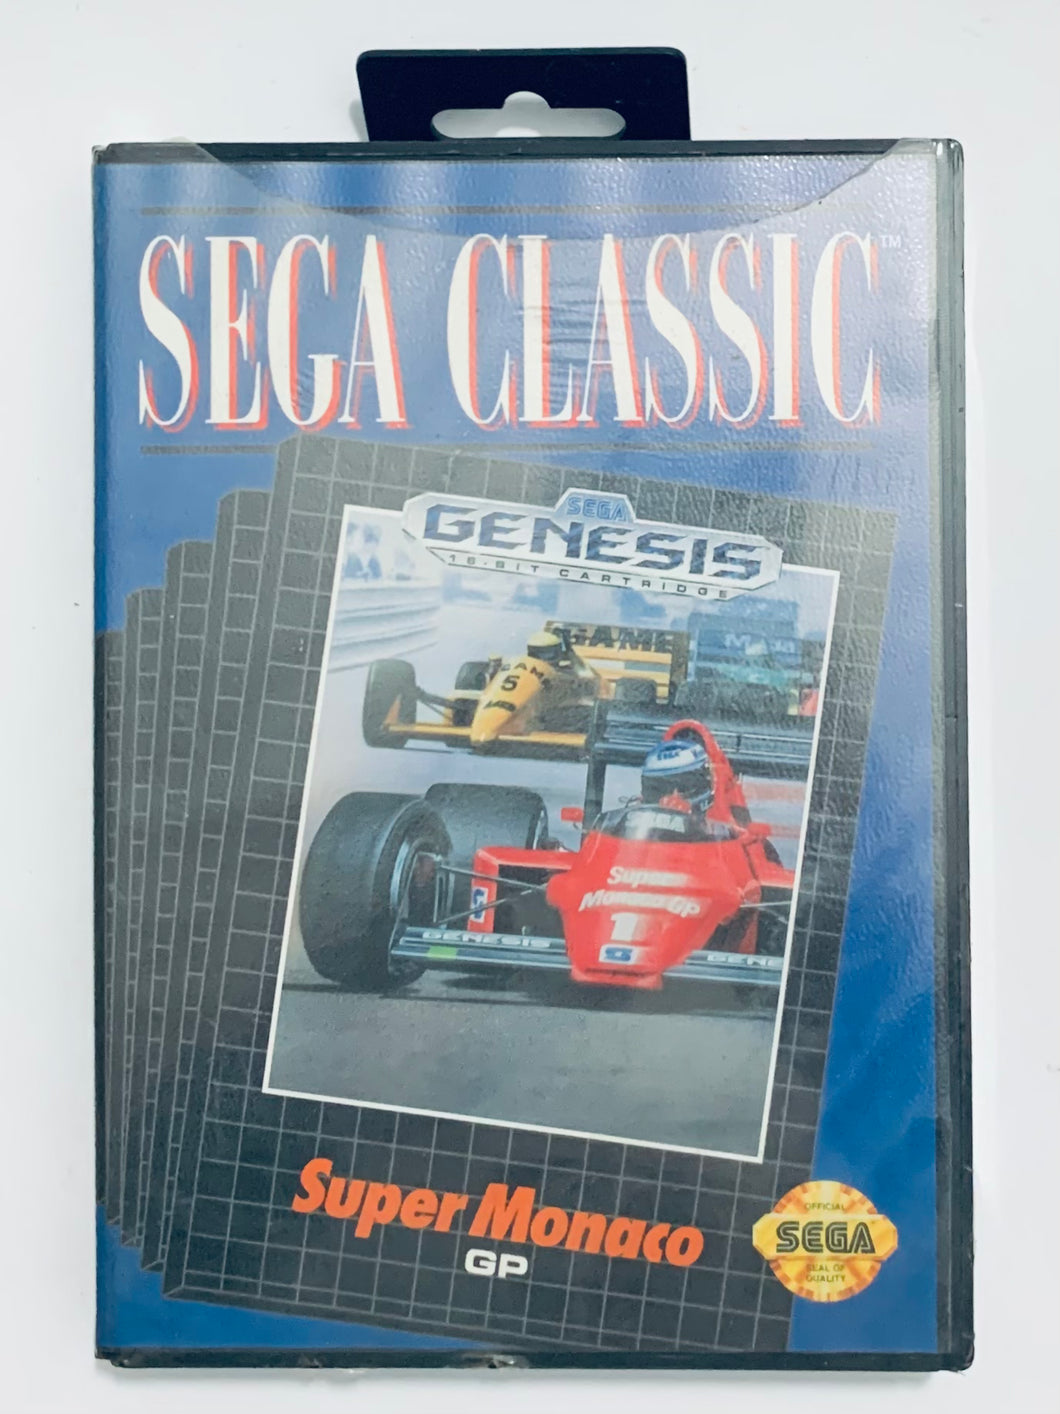 Super Monaco GP (Classic) - Sega Genesis - NTSC - Brand New (1107C)